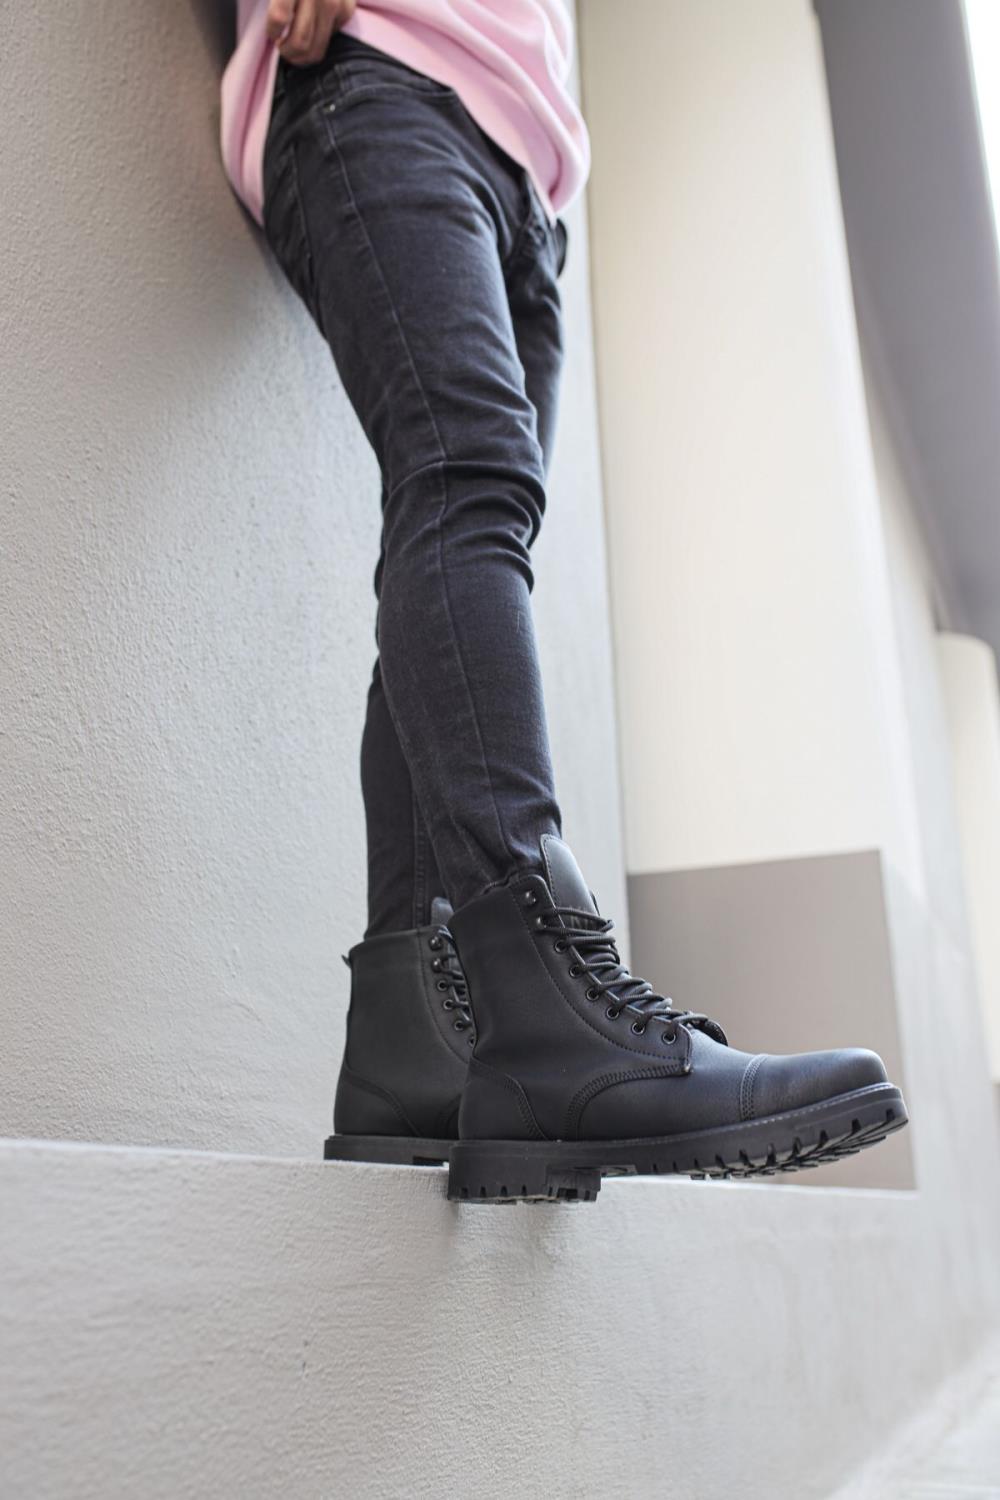 Men's High-Sole Boots B-022 Black (Black Sole) - STREETMODE ™